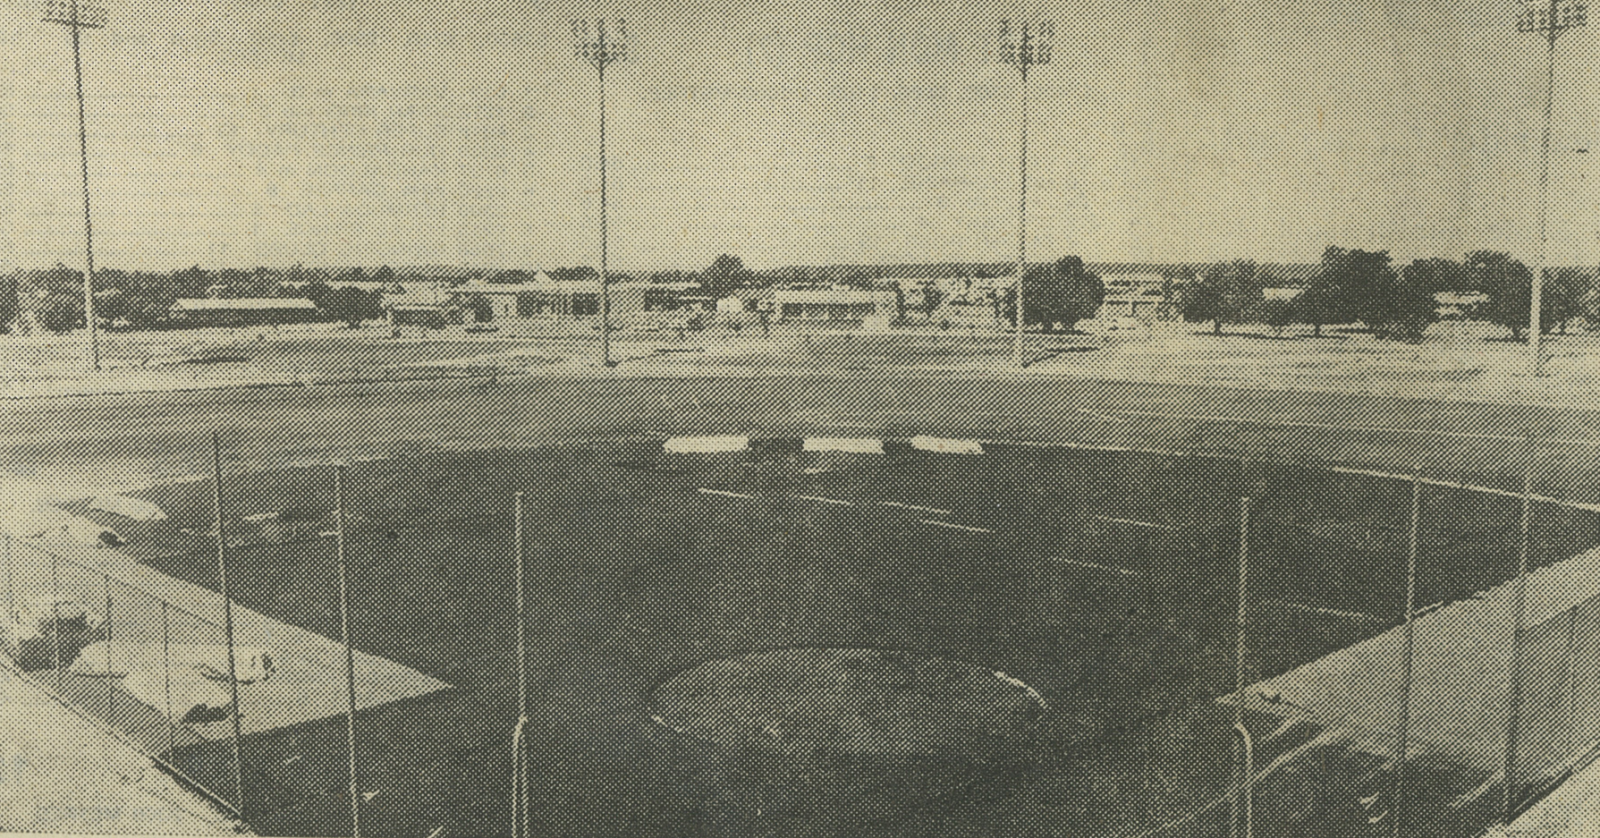 Parry Field Baseball Stadium under construction - 1982